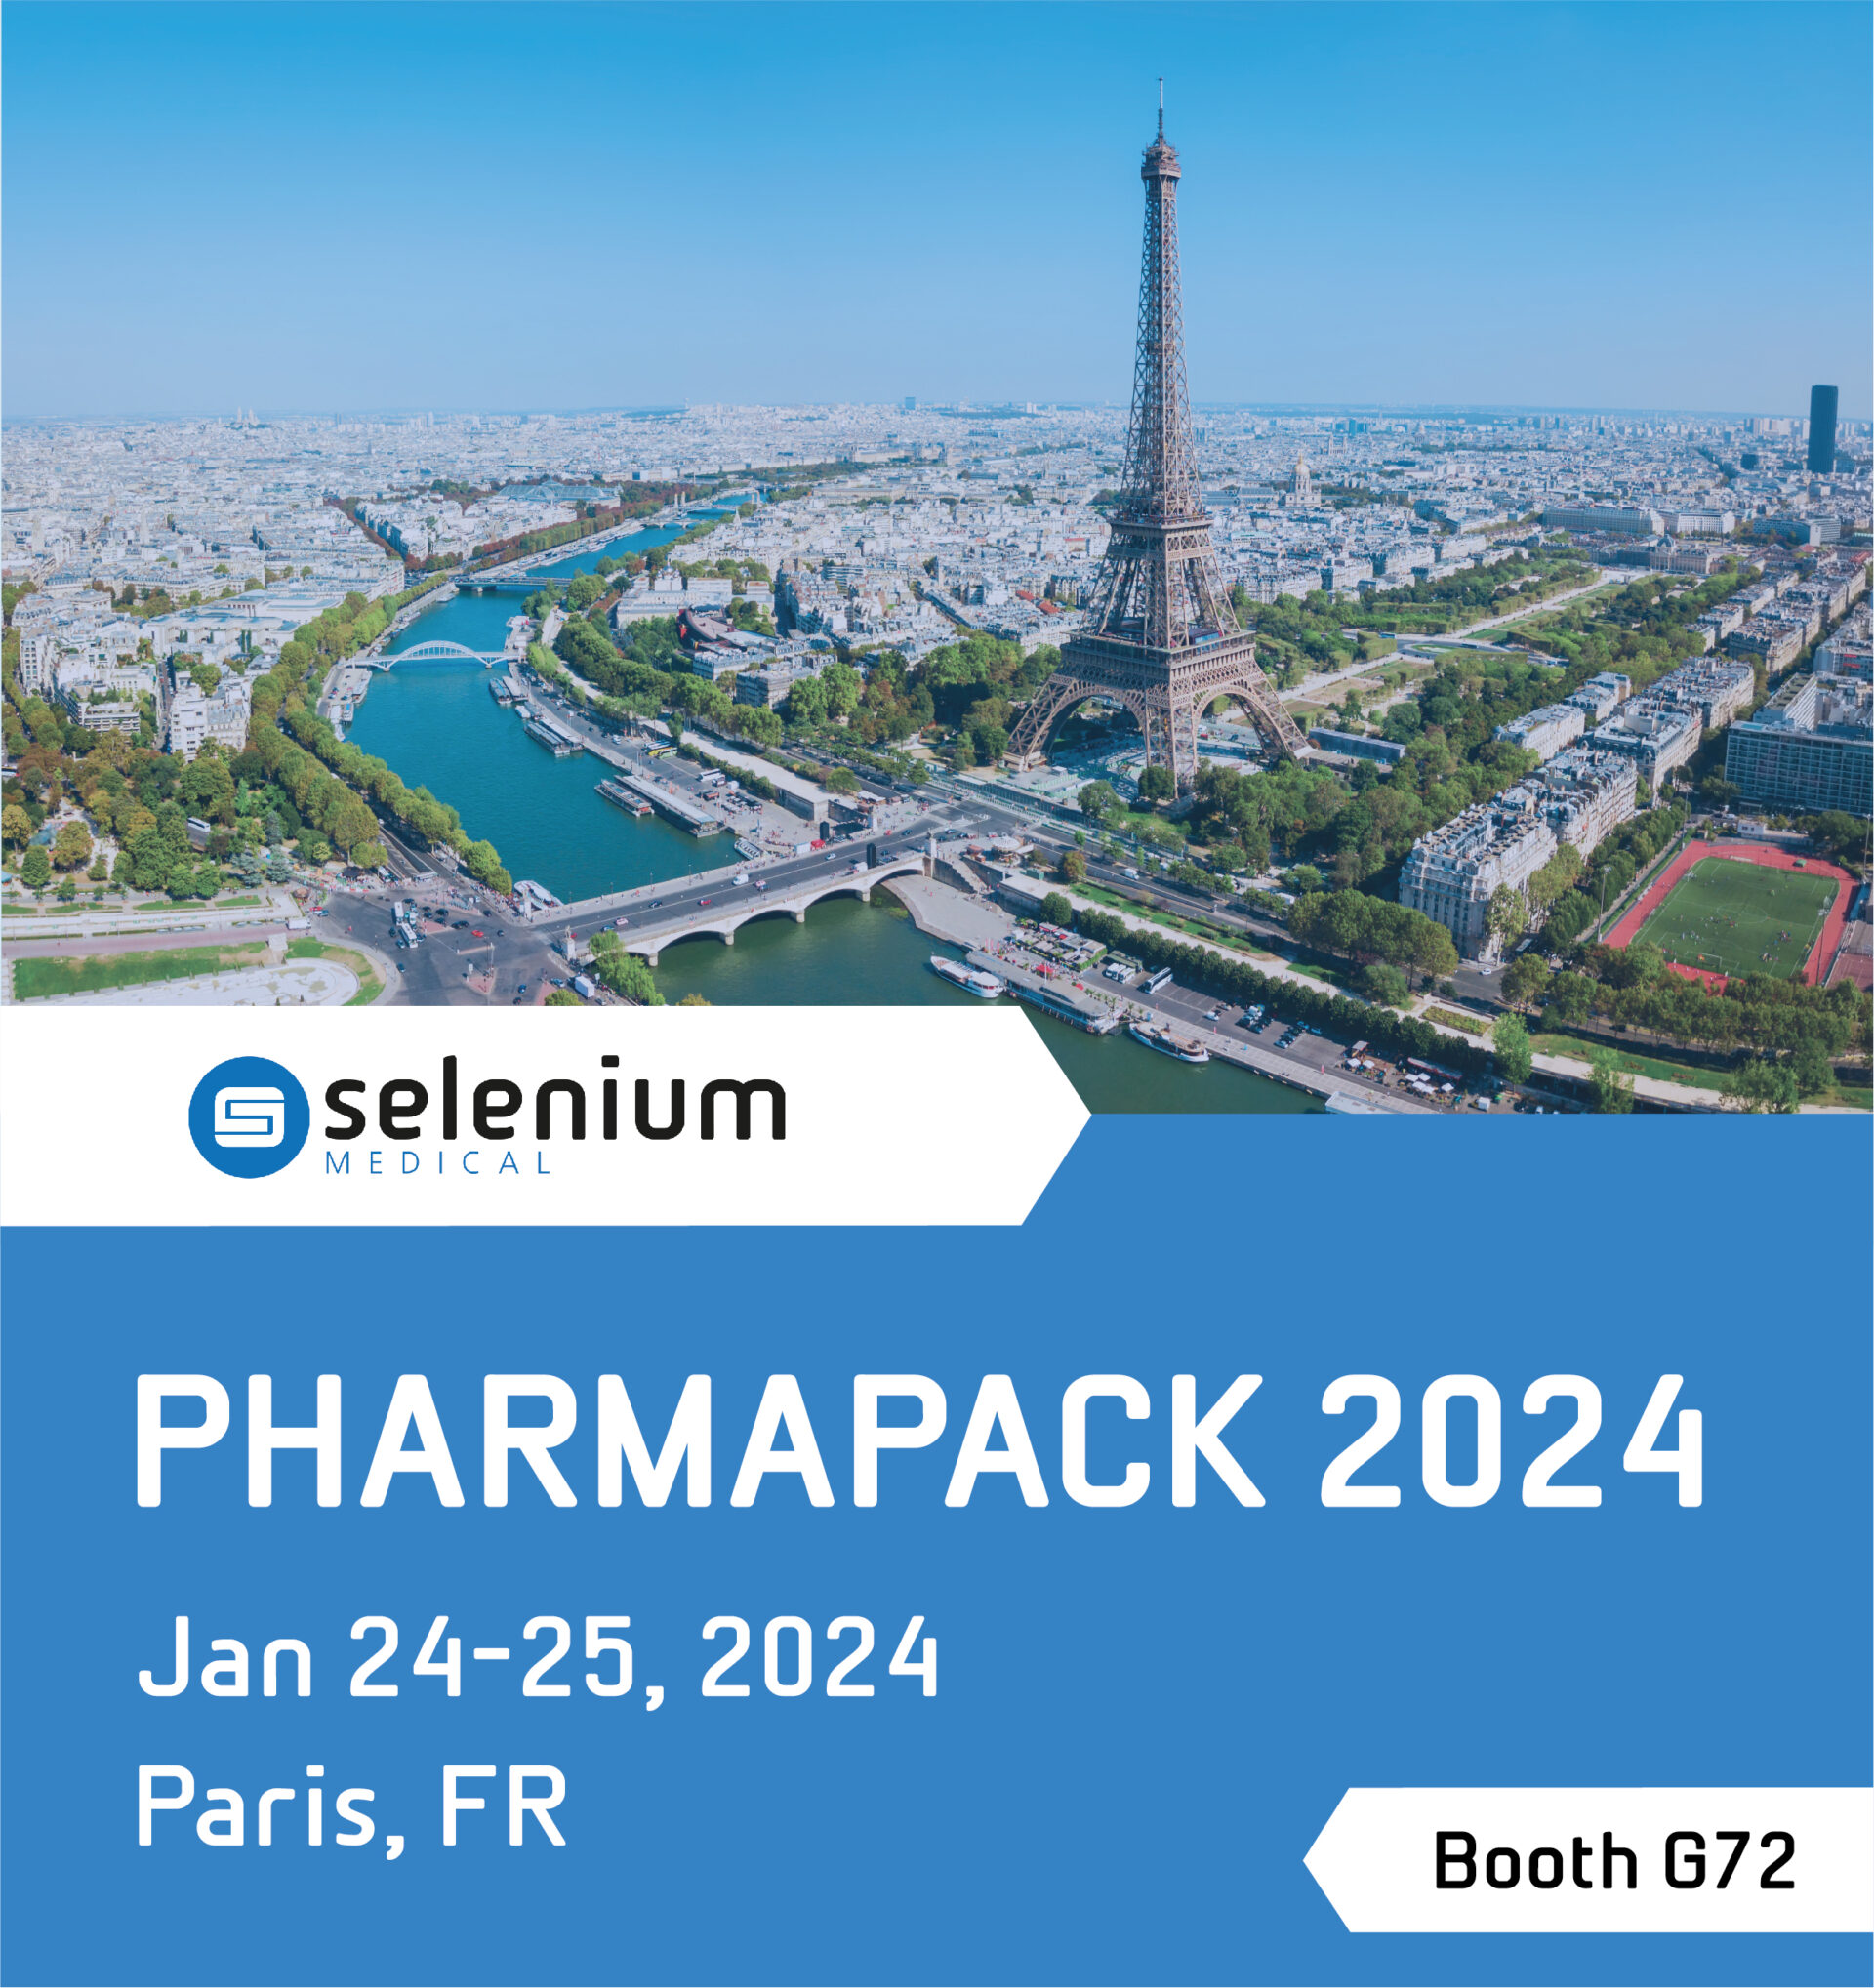 Selenium Medical - Pharmapack 2024